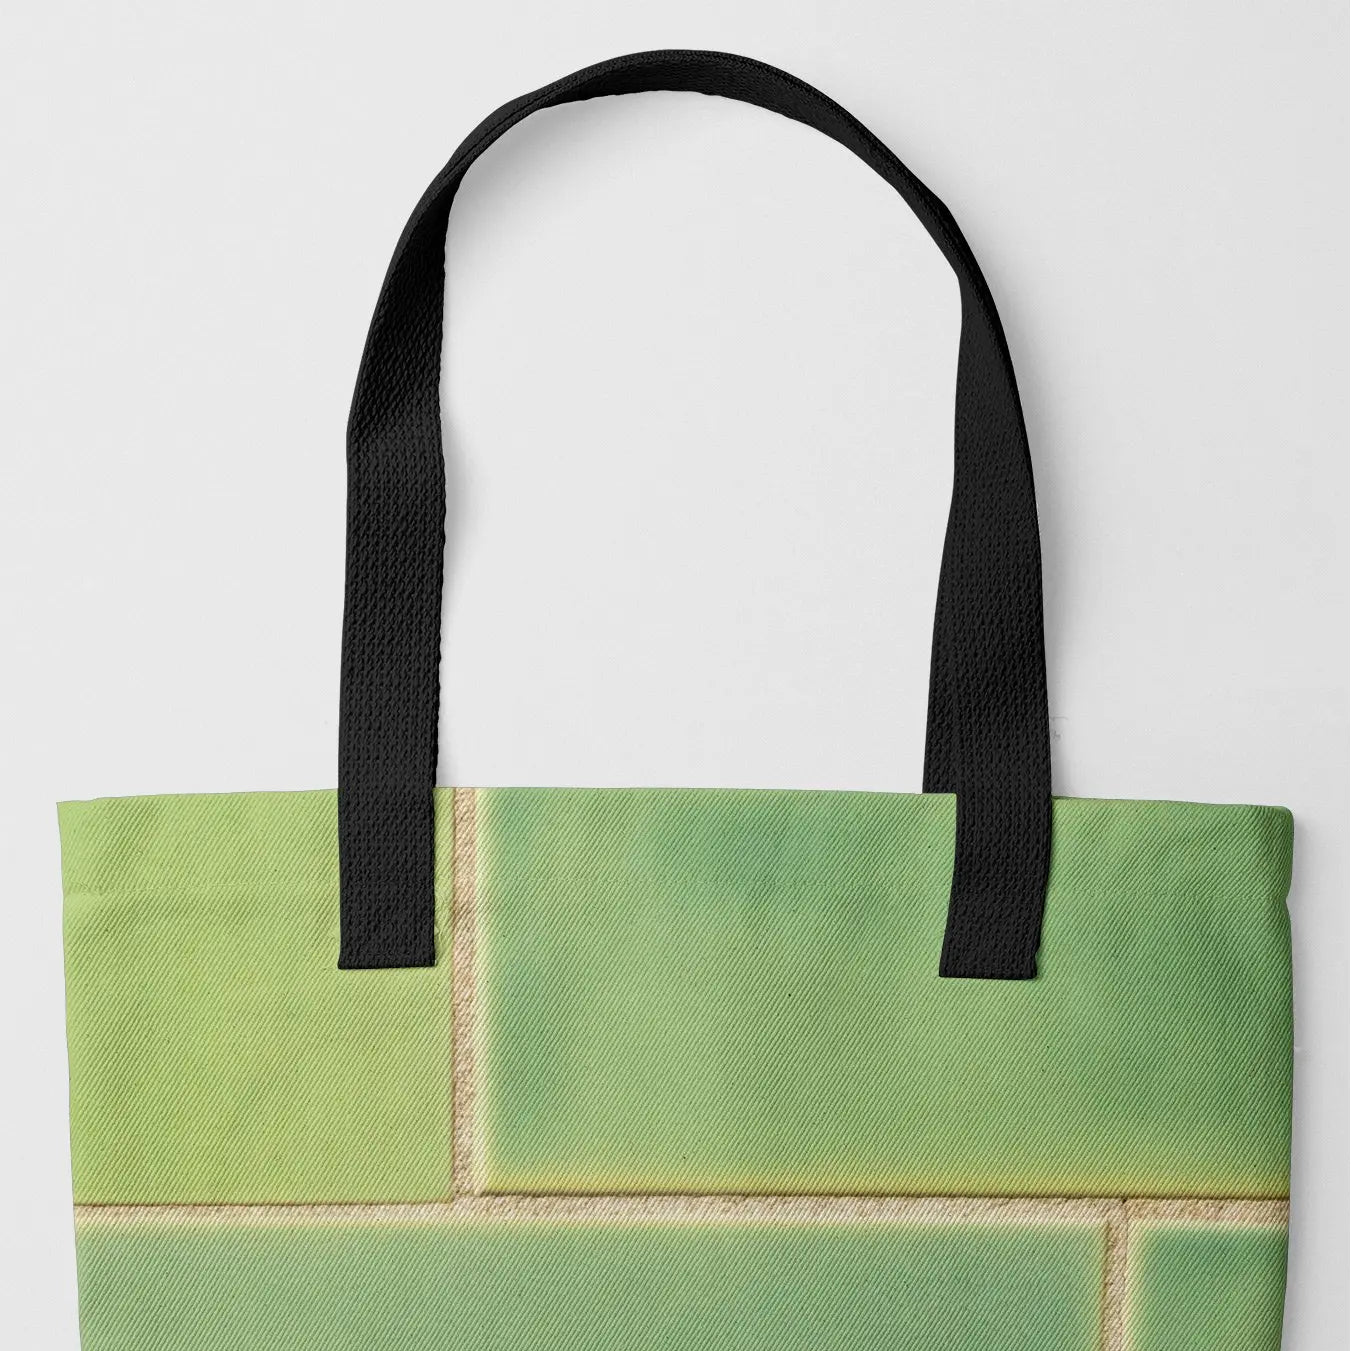 Emerald City - Heavy Duty Reusable Grocery Bag - Black Handles - Shopping Totes - Aesthetic Art